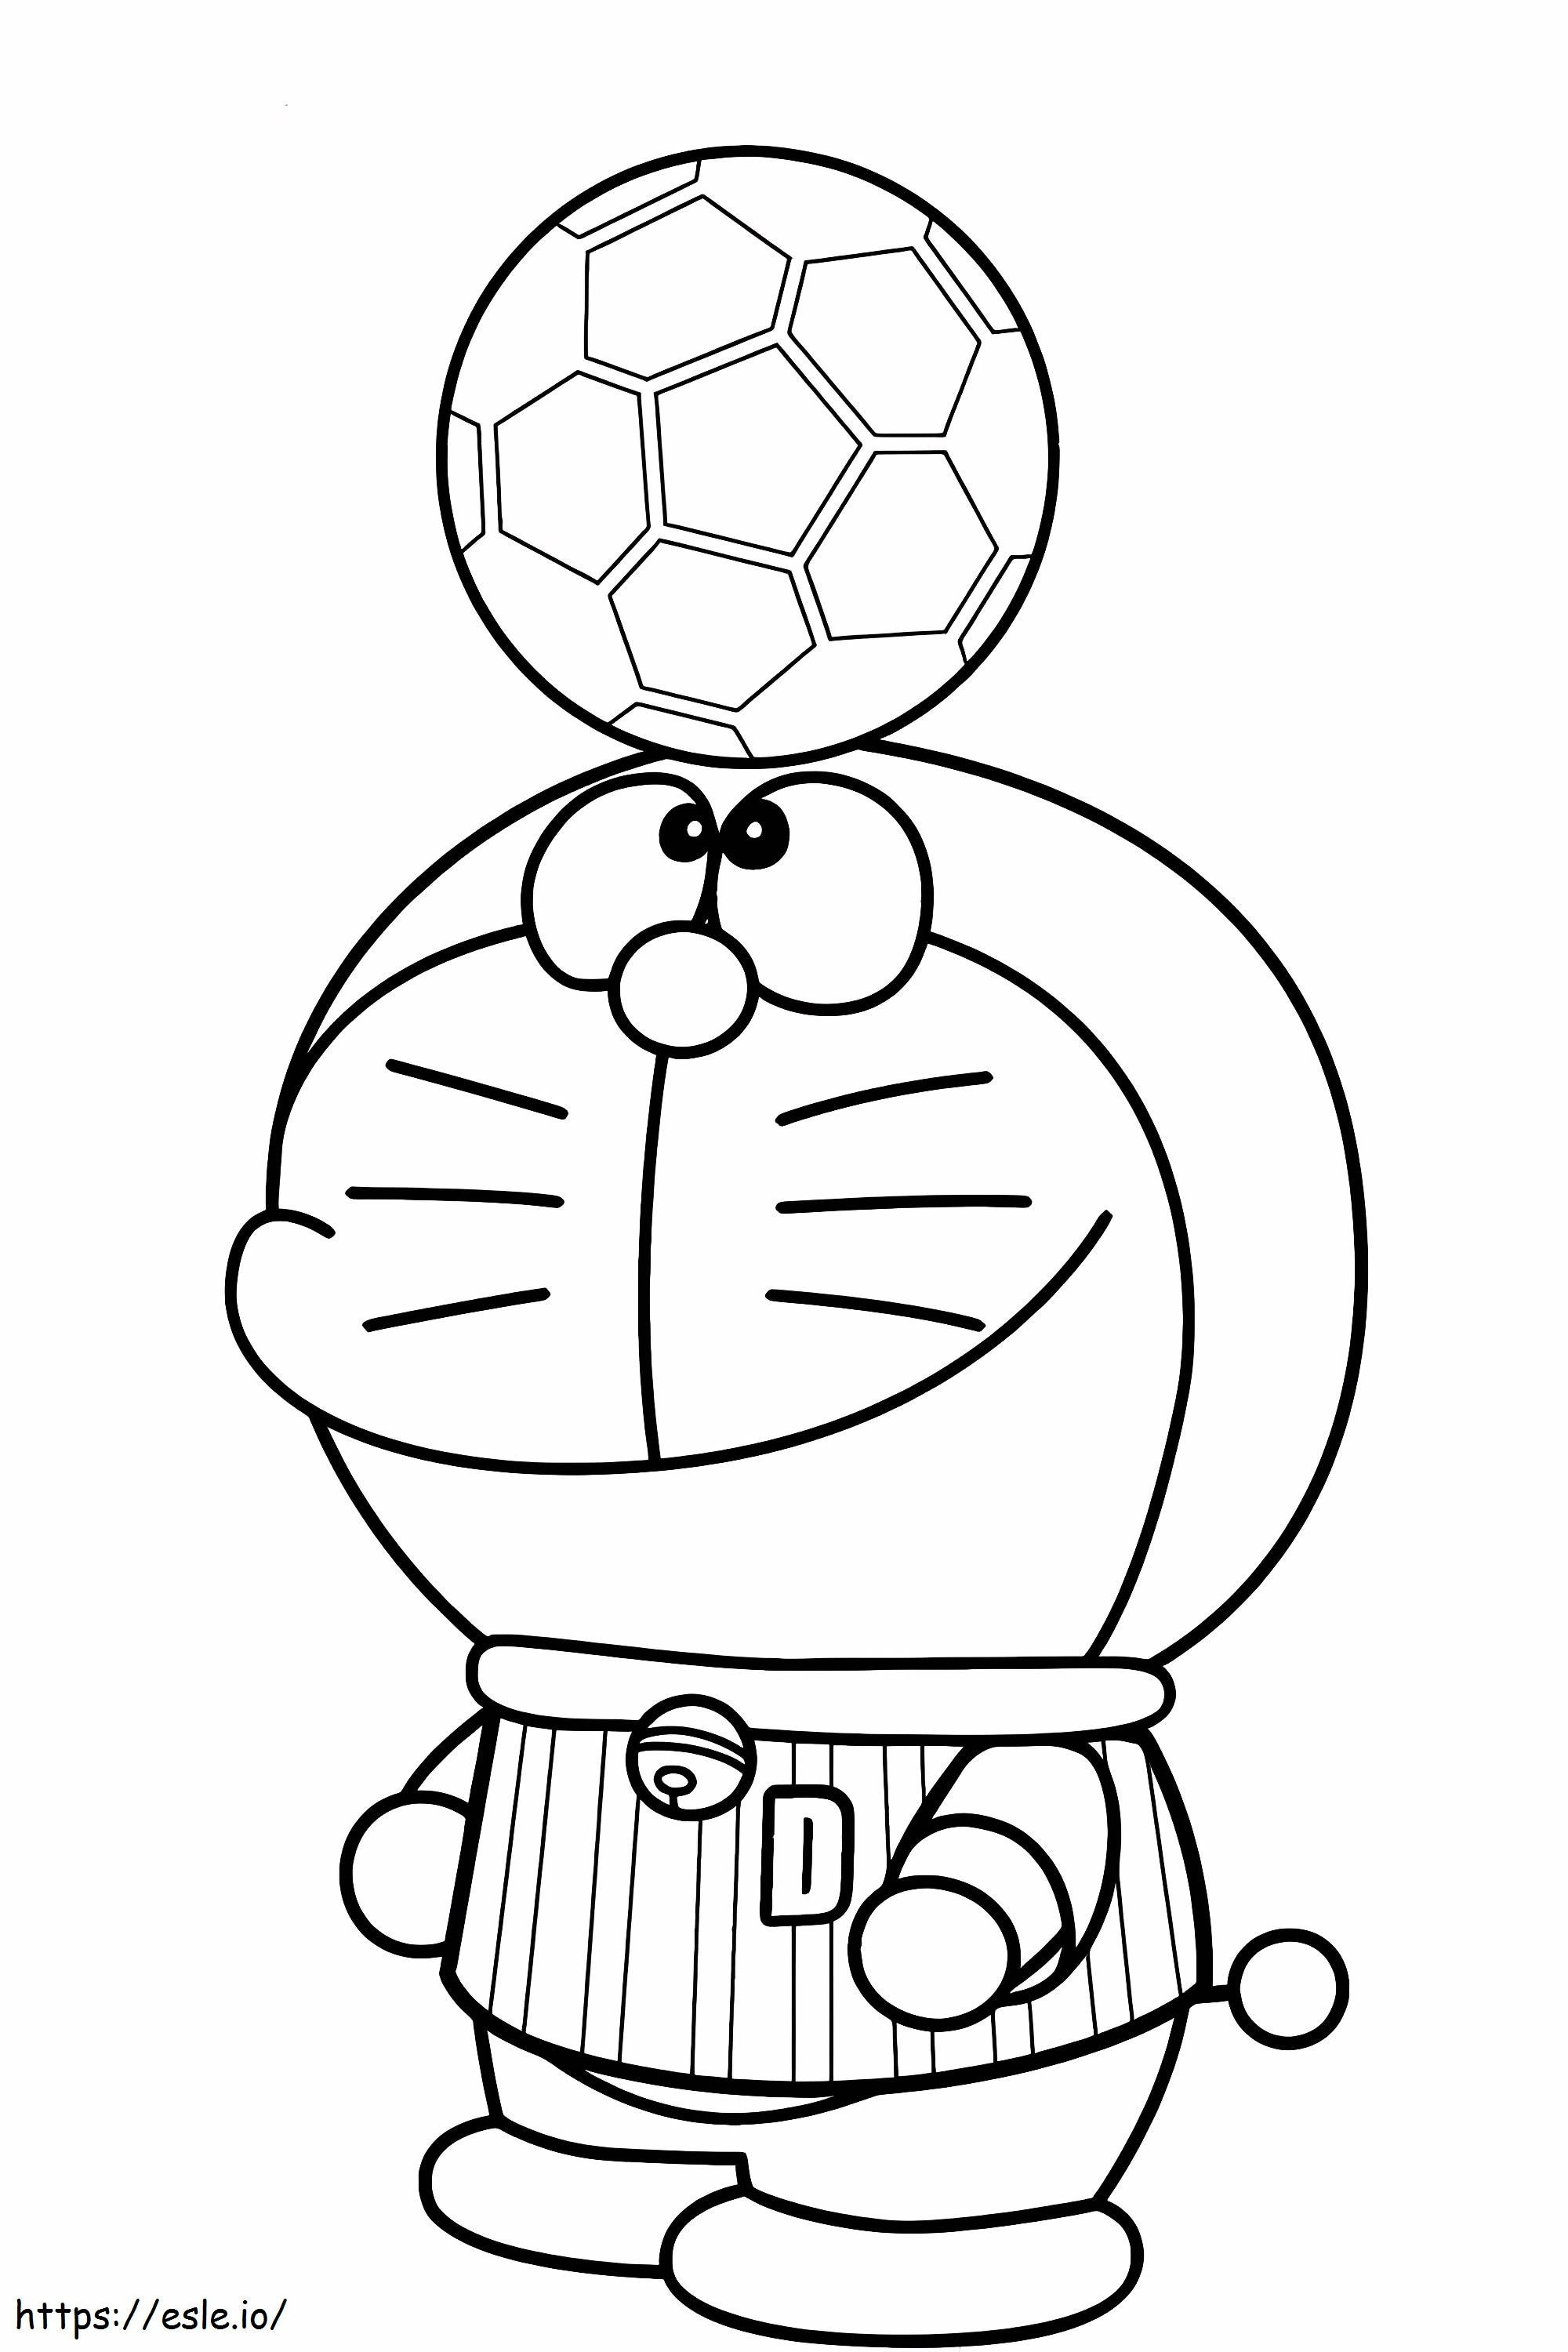 1540782584_I Love Soccer Beautiful Doraemon Colouring Pages Line Magician Doraemon Of I Love Soccer coloring page